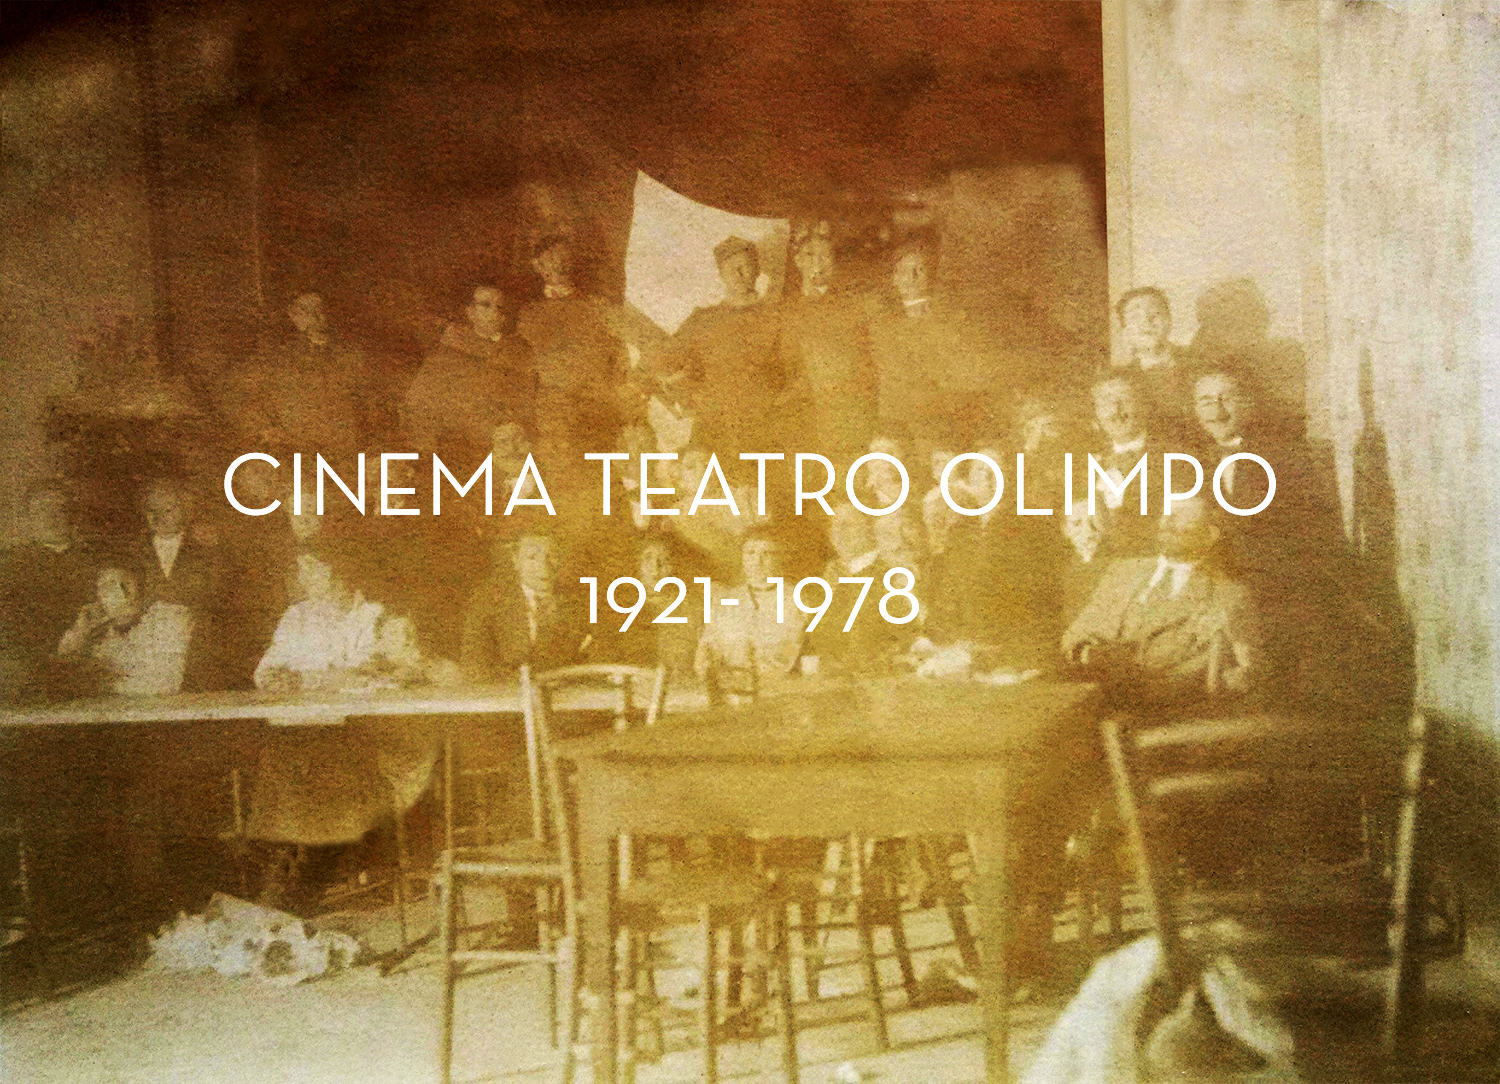 Cinema Teatro Olimpo (1921-1978)